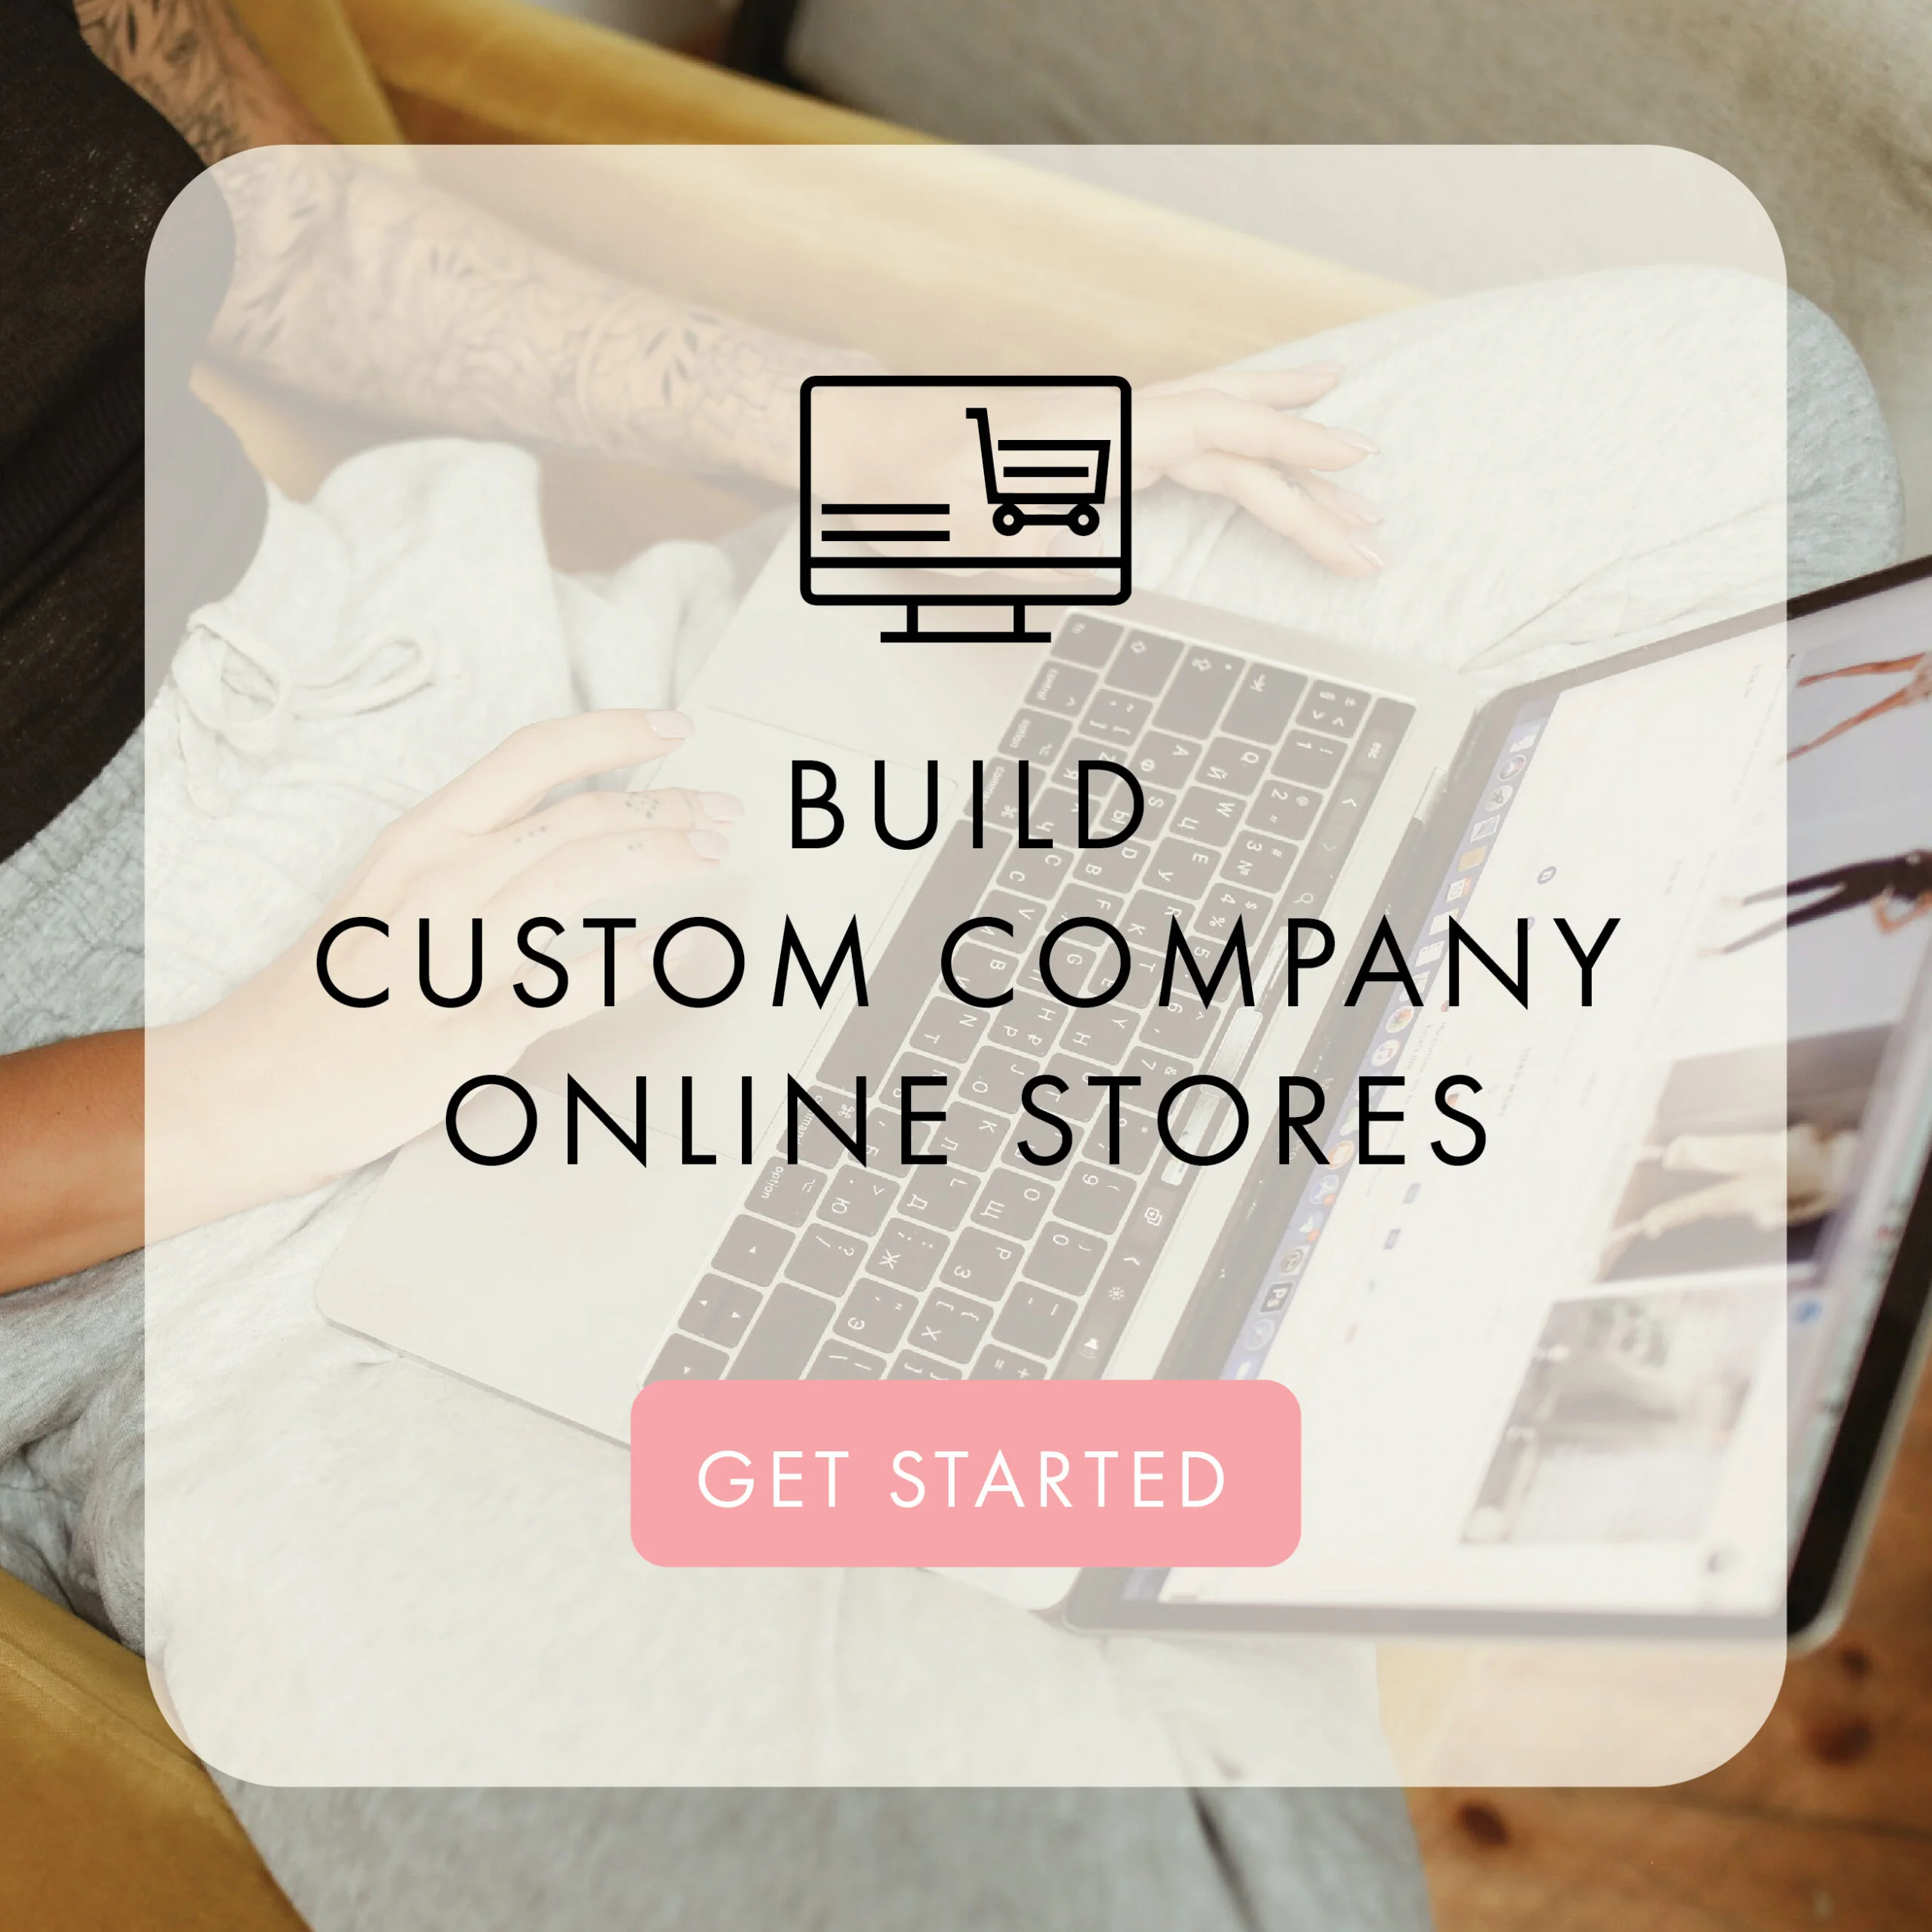 Build Custom Company Online Stores